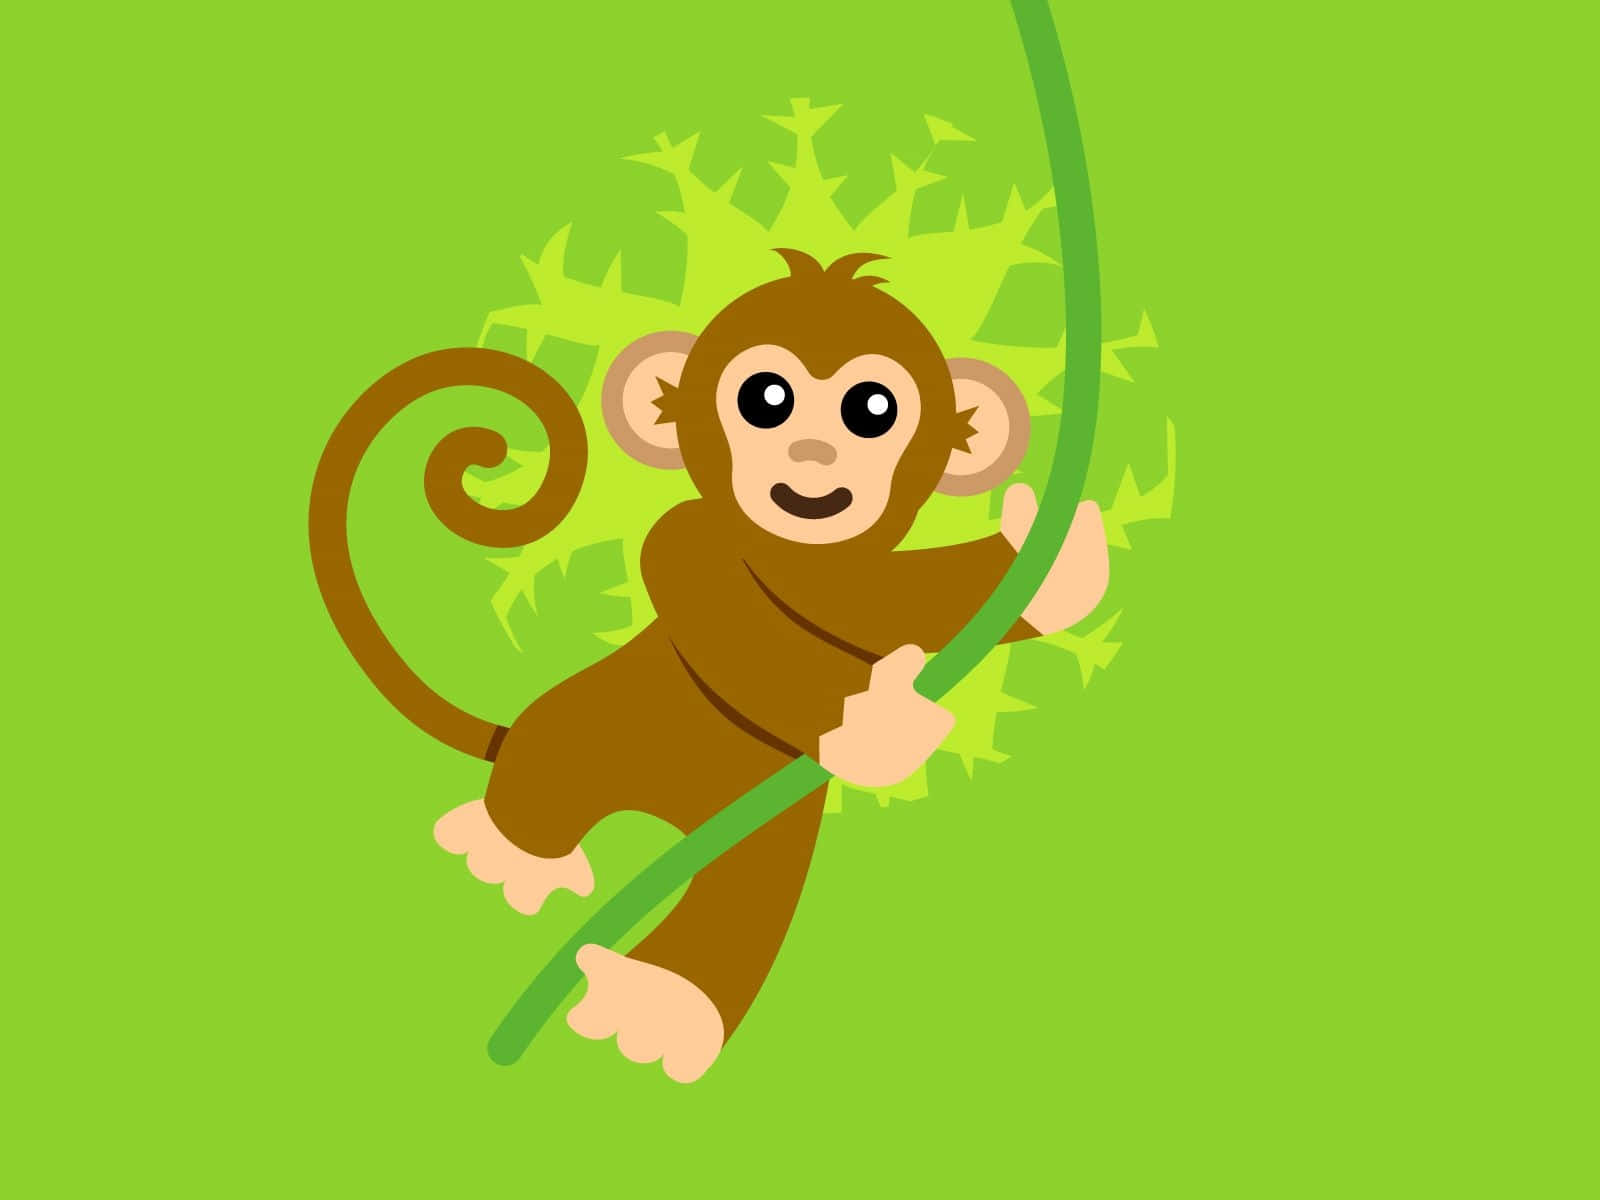 This cartoon monkey looks ready to take on any adventure.